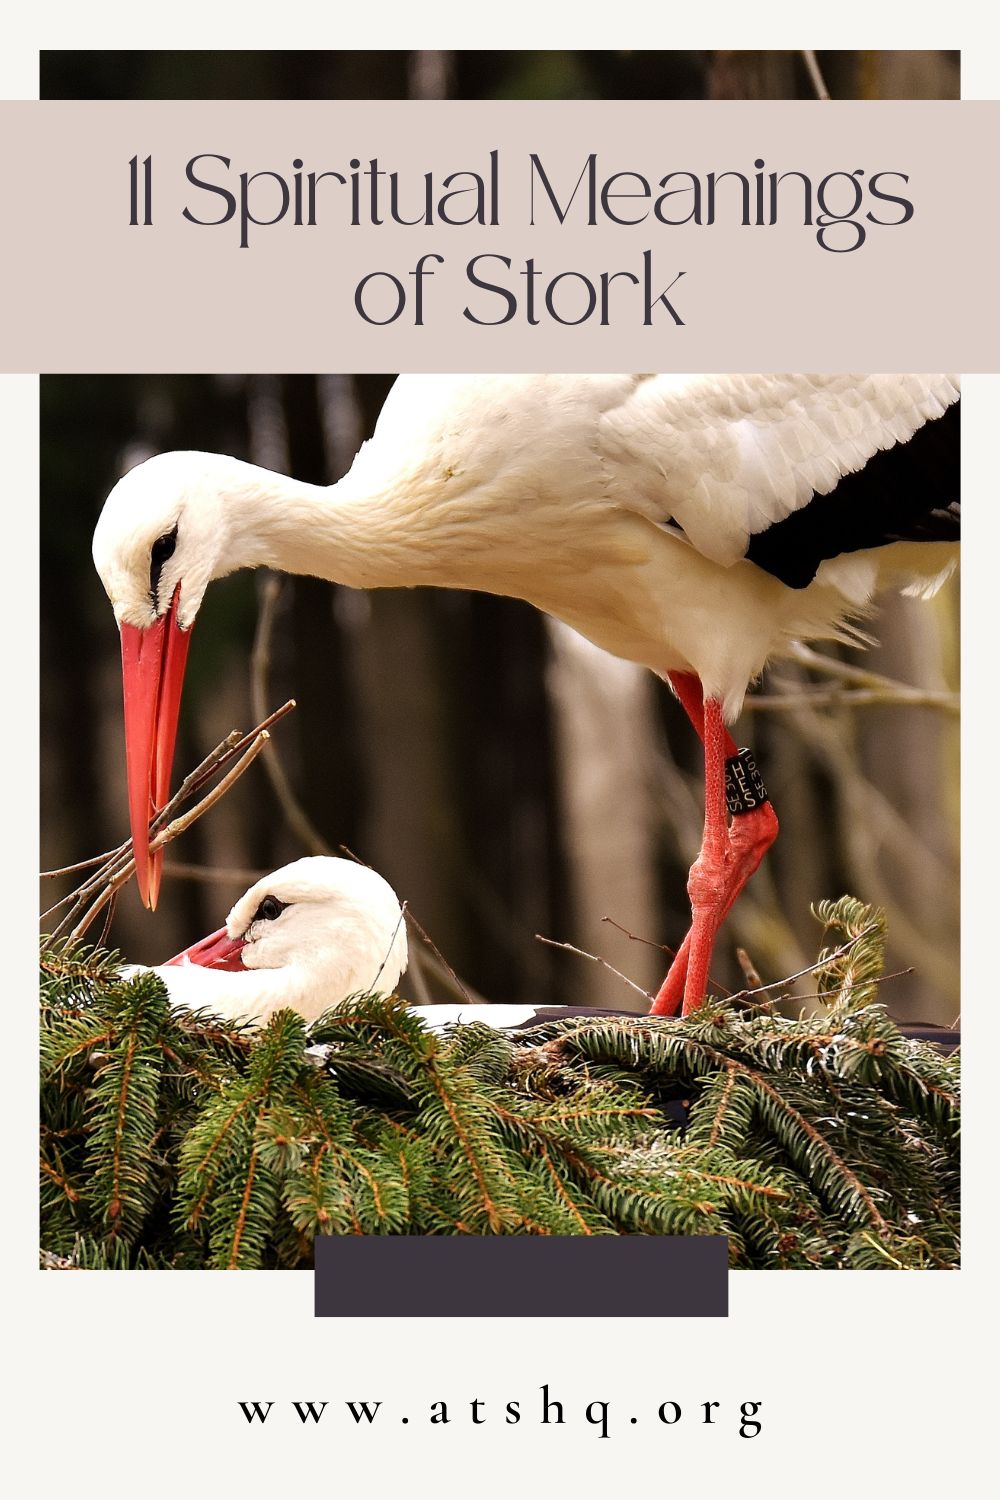 11 Spiritual Meanings of Stork